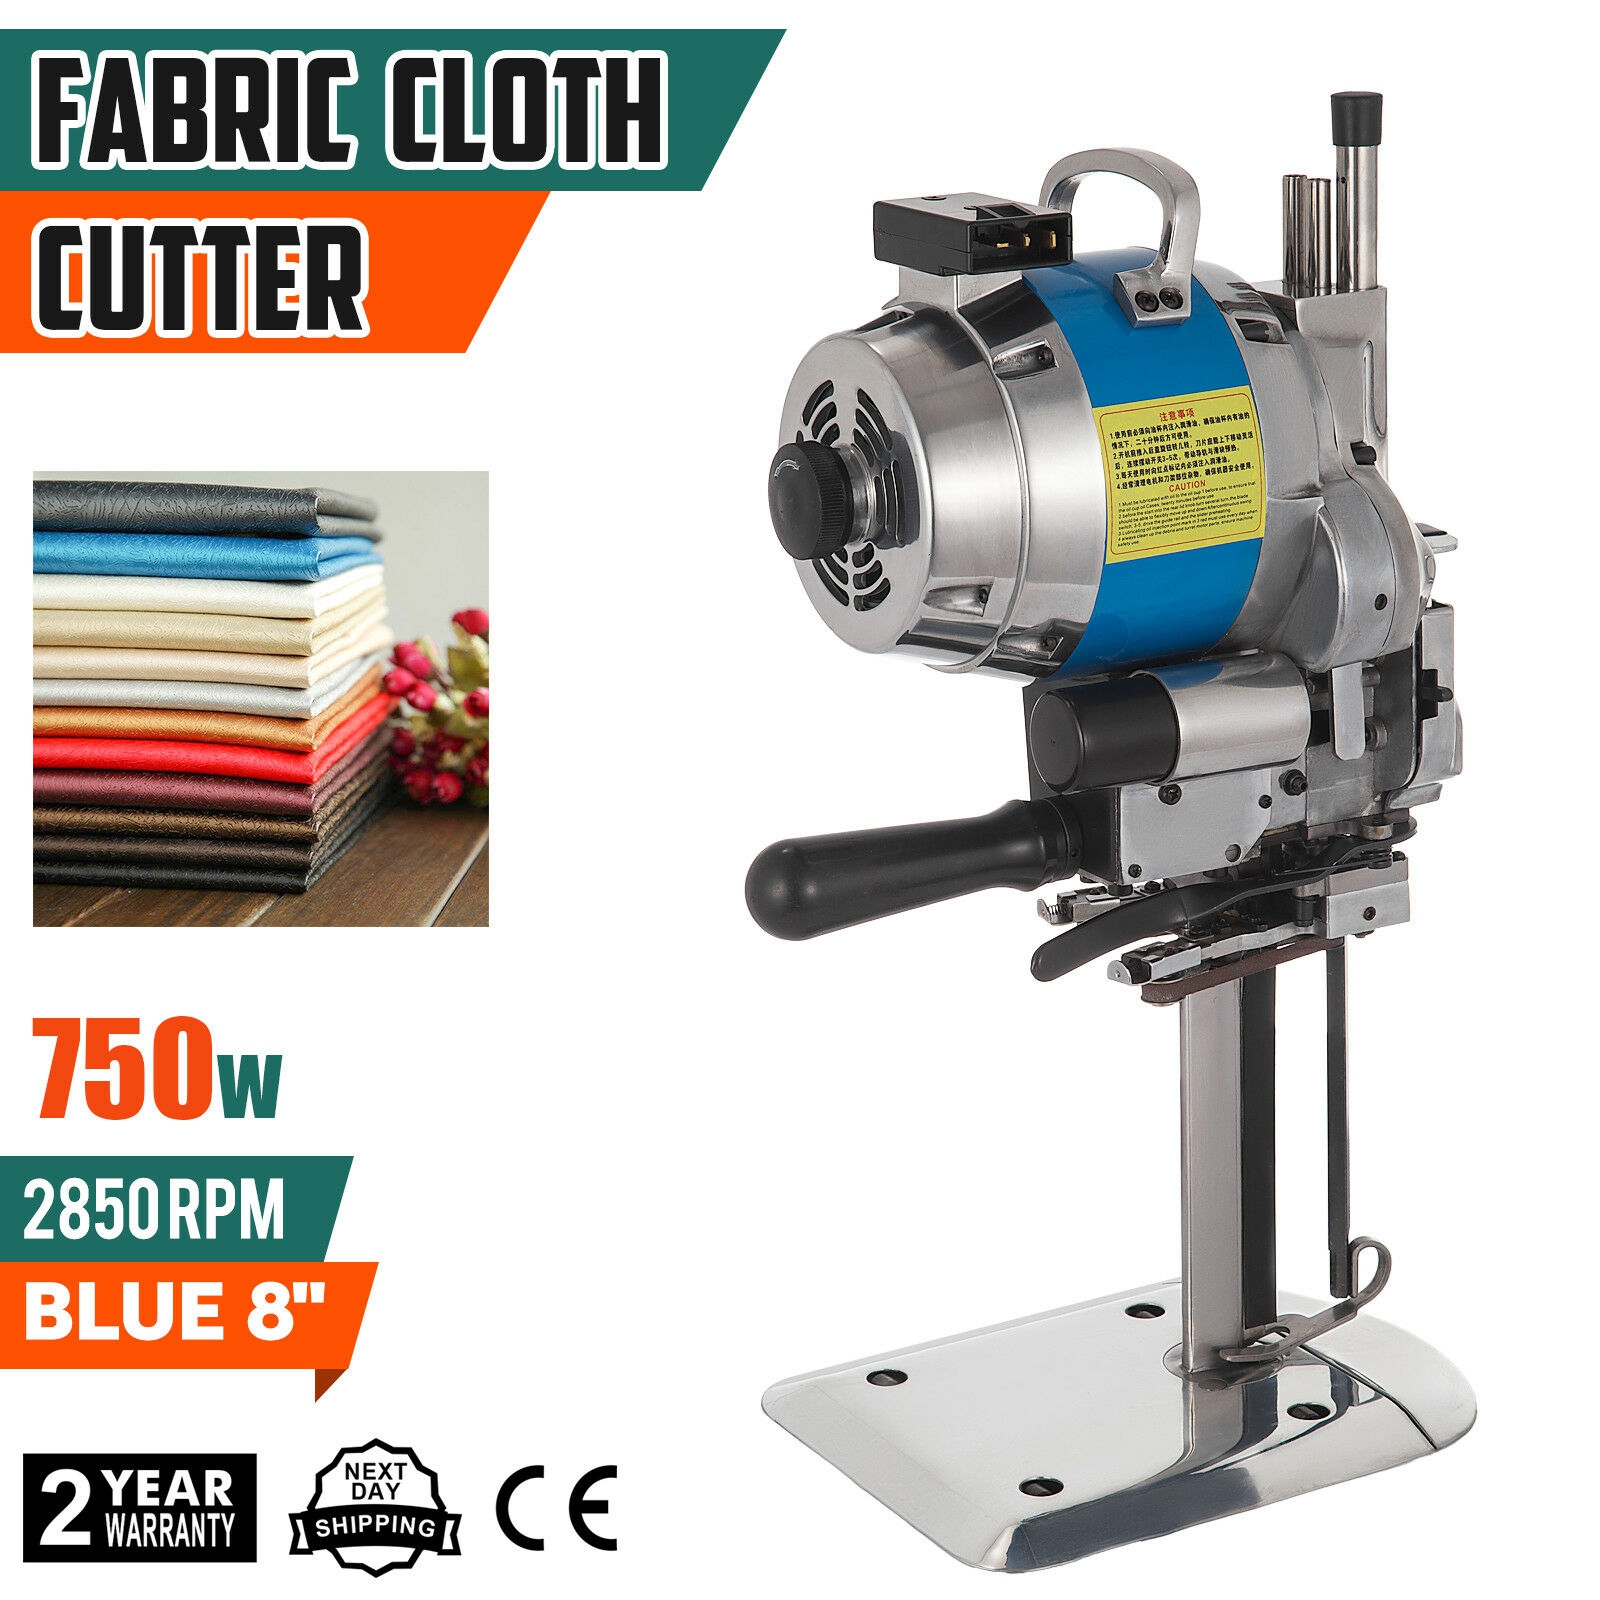 Fabric Cloth Cutter Blue 10 Cutting Machine 750W Auto Grind Low Noise